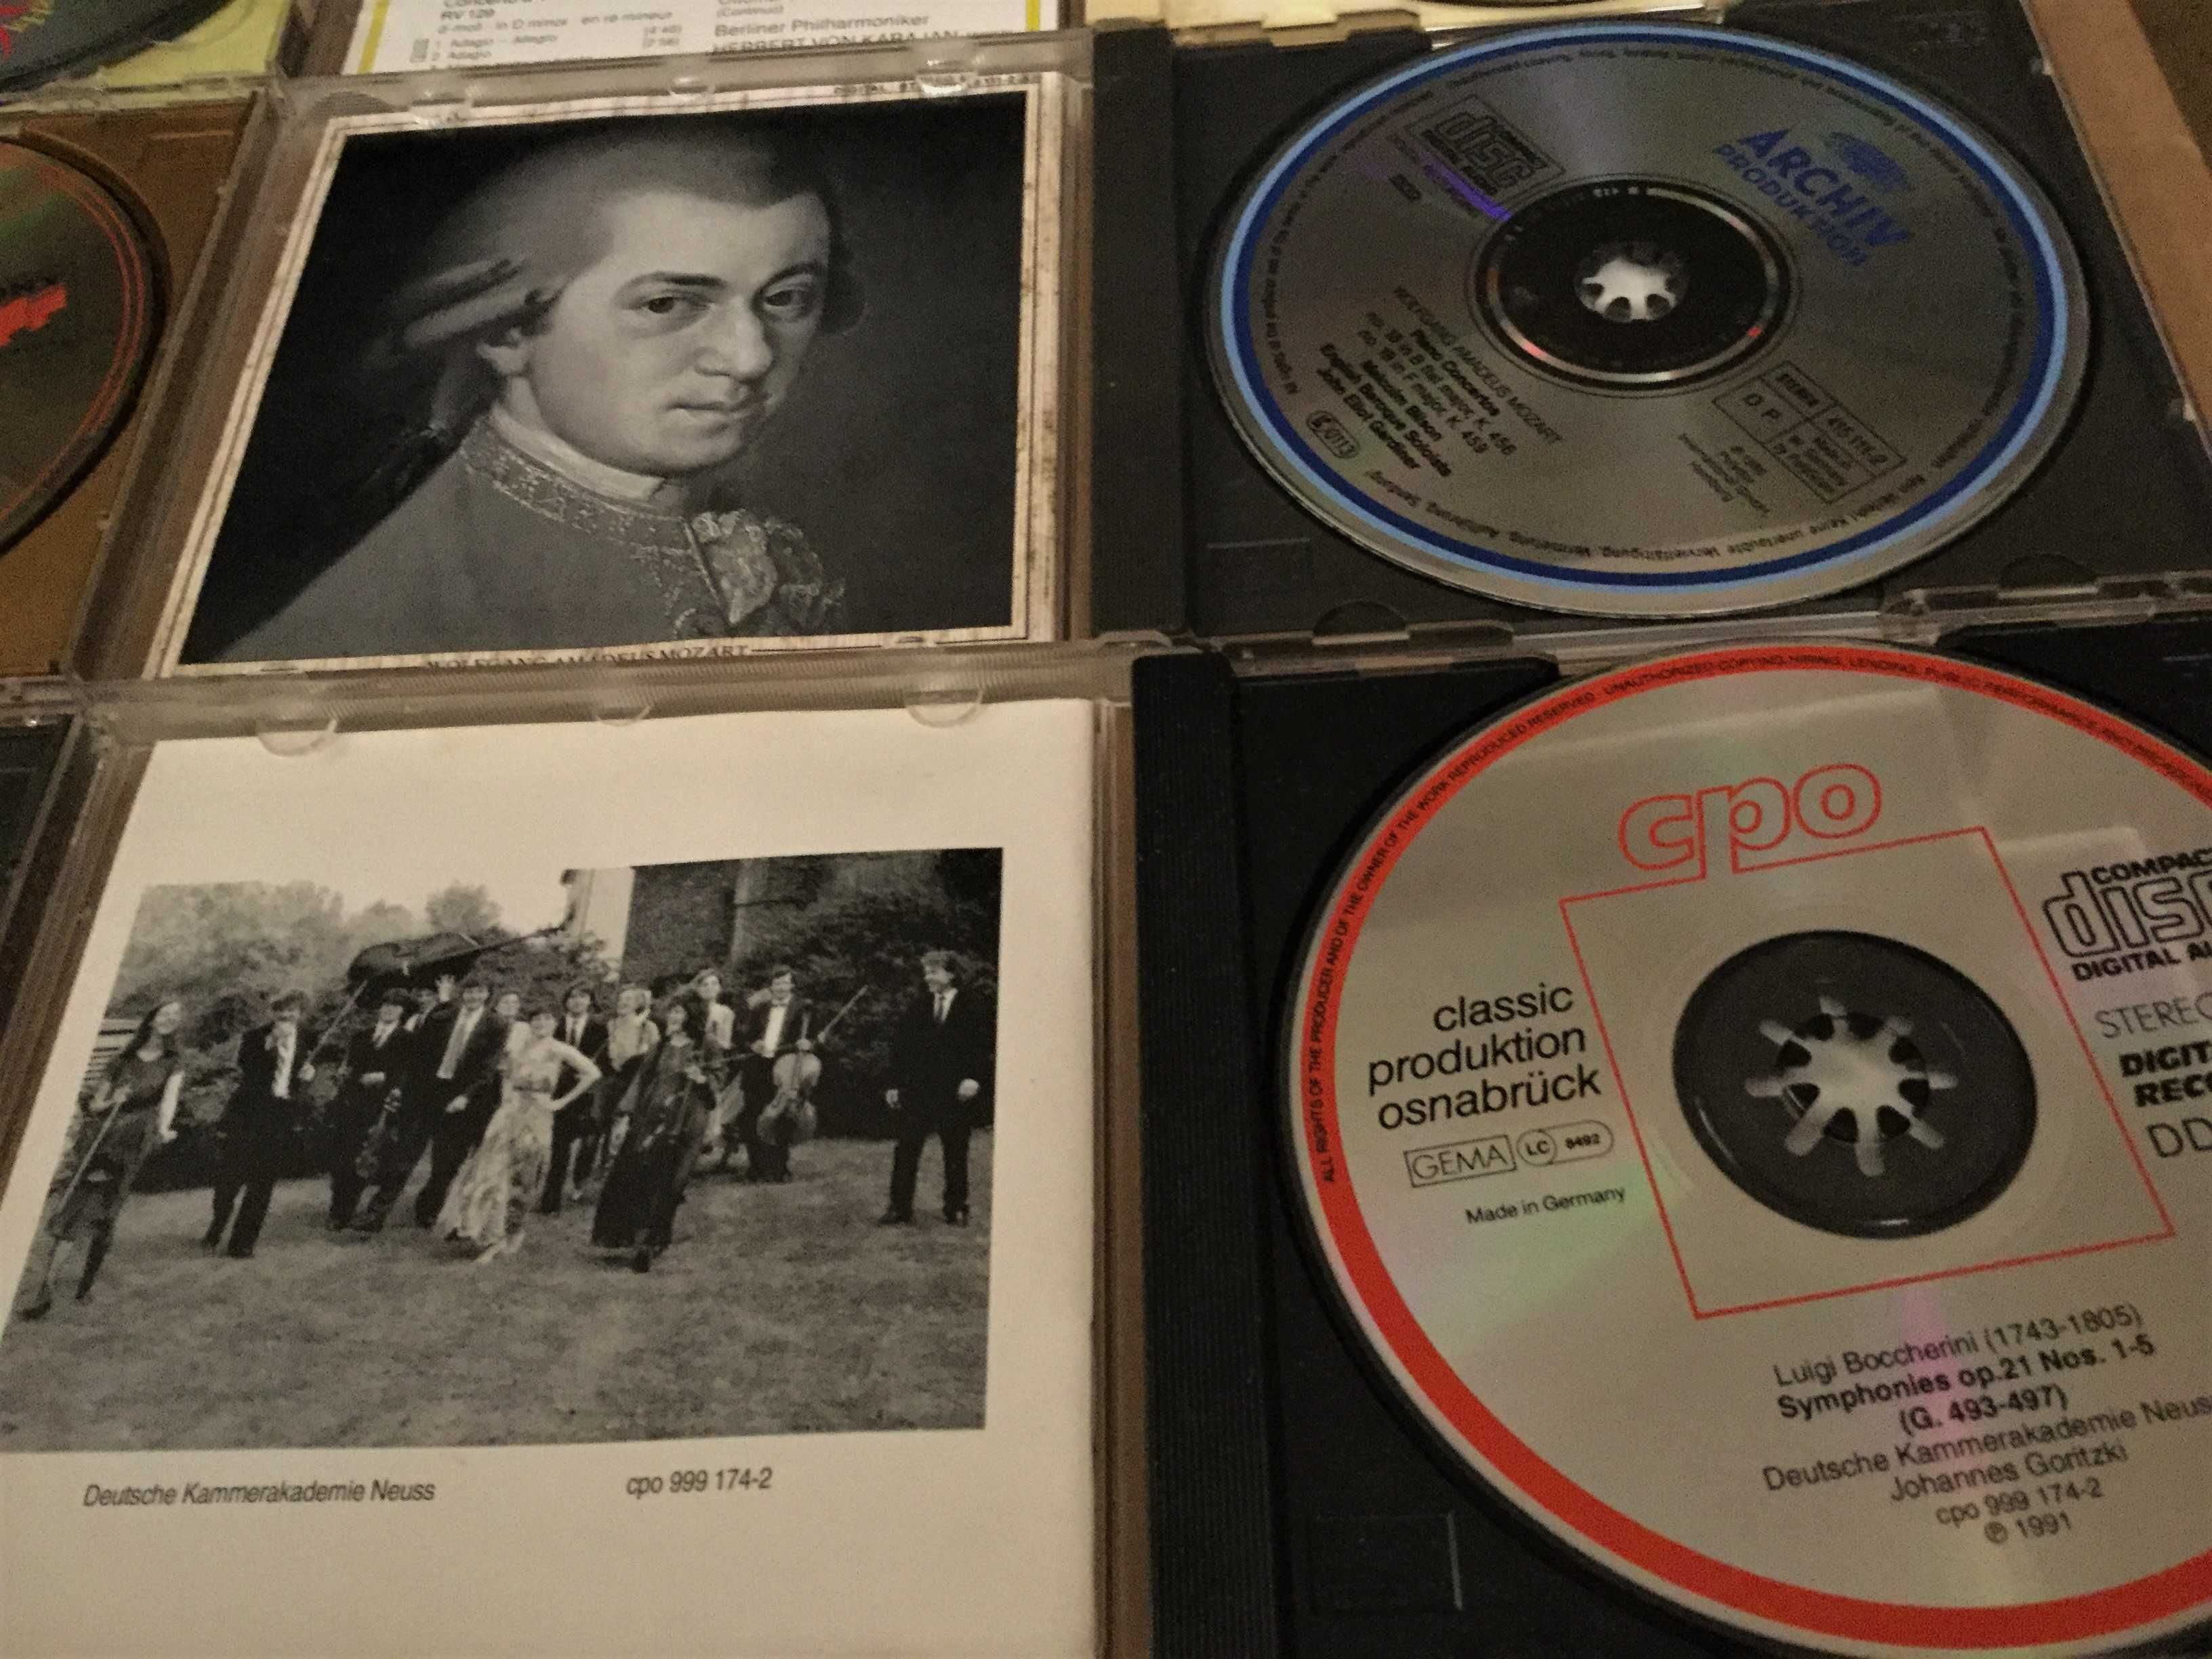 Berlioz, Boccherini, Carmina Burana, Salieri Bartoli - Kolekcja 9CD